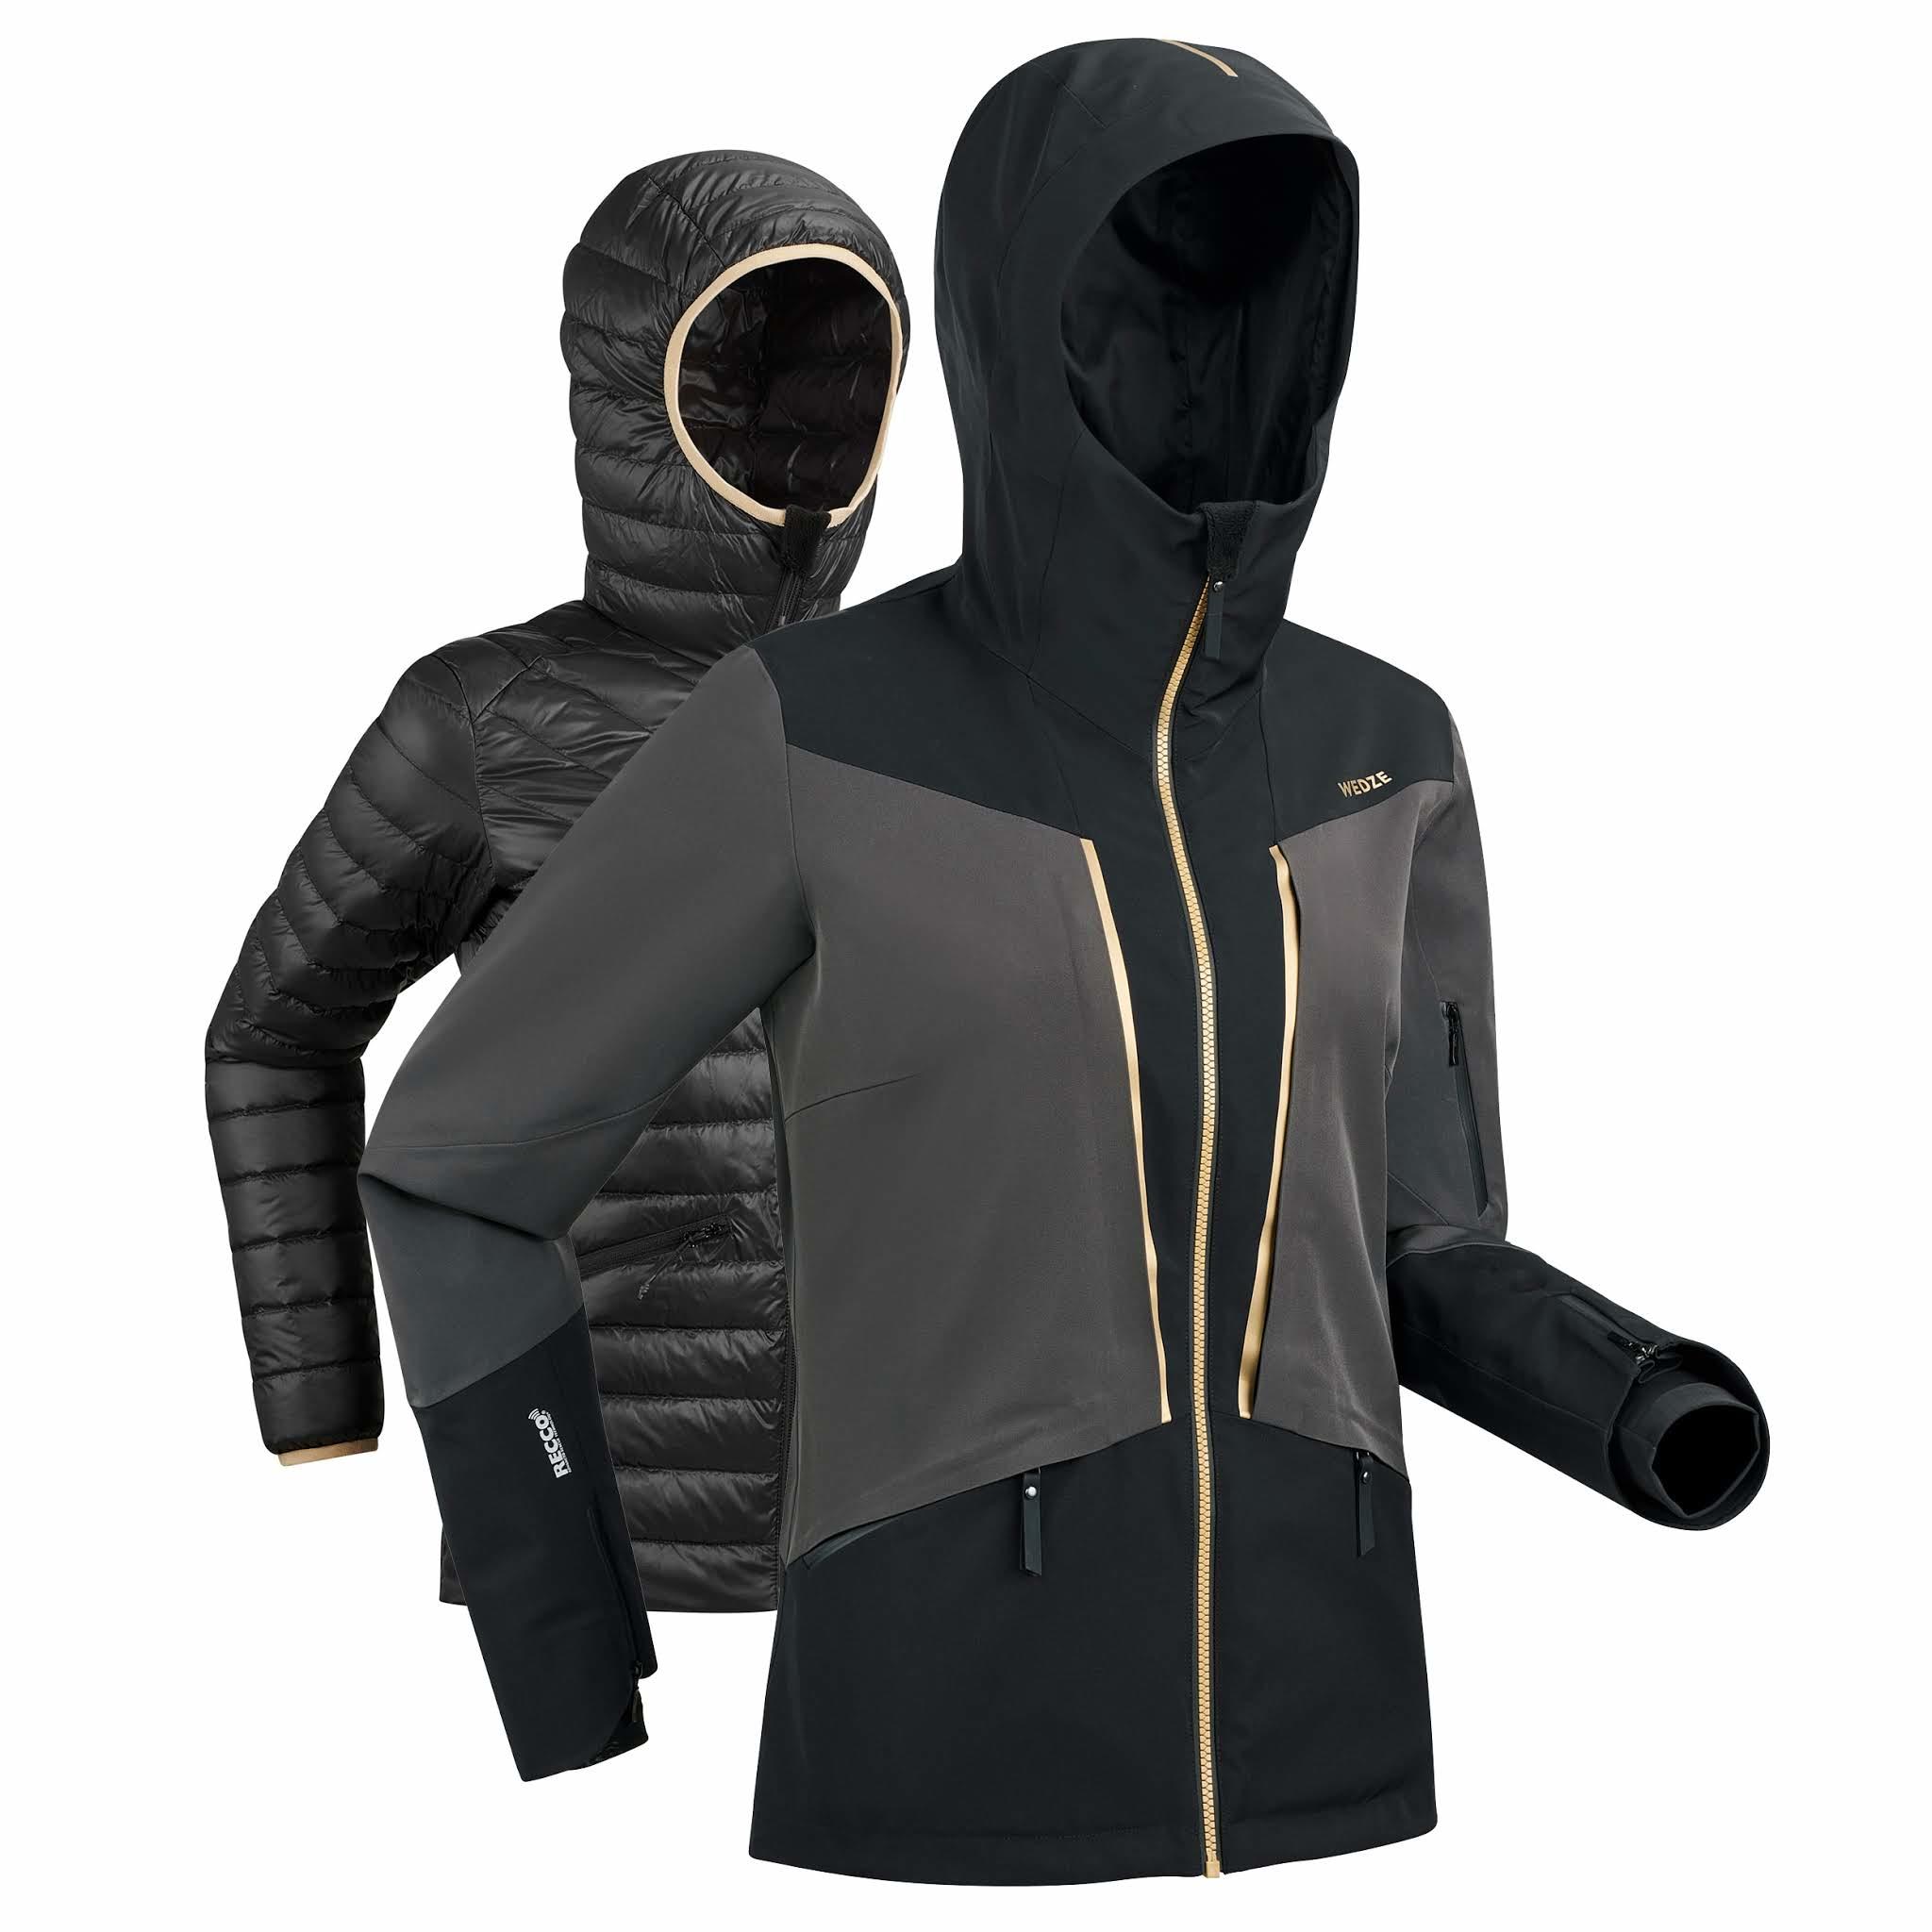 decathlon jacket for women